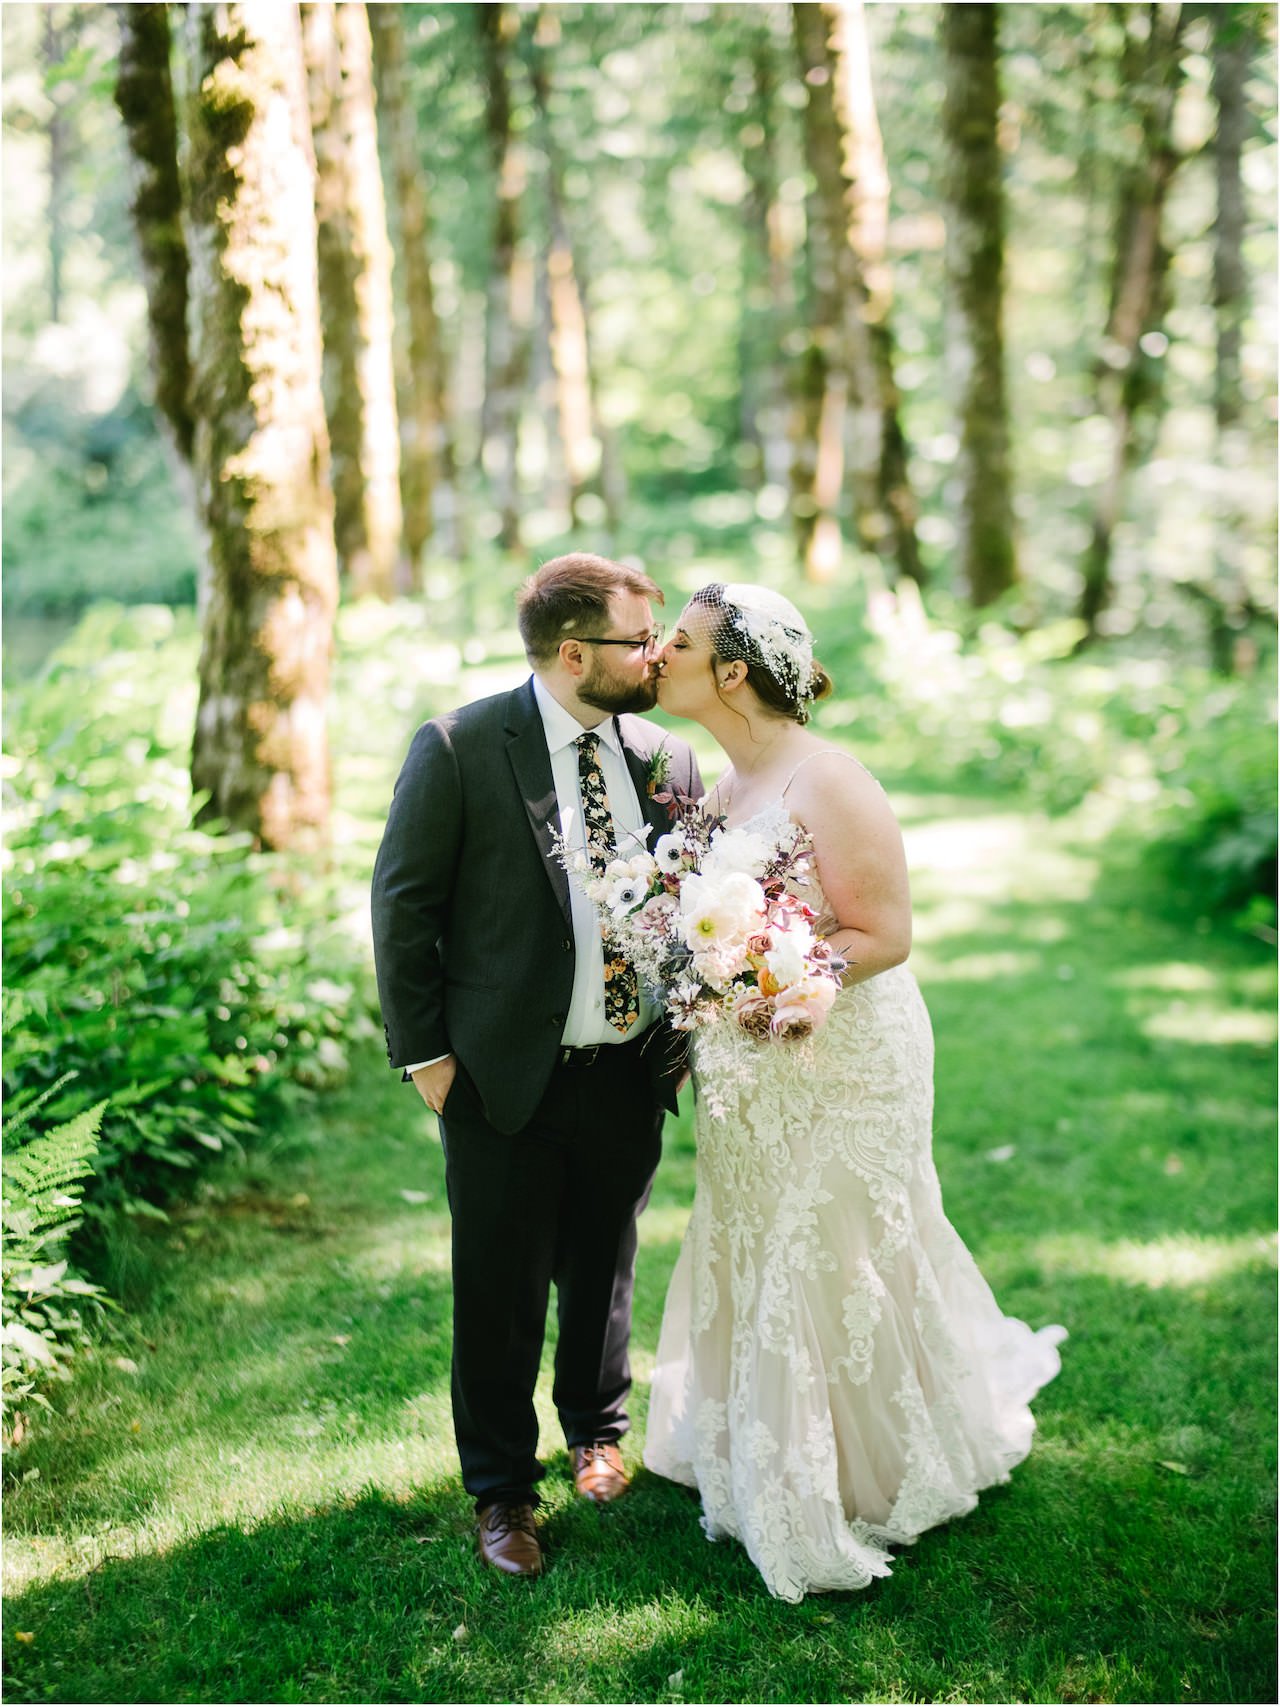  Bride and groom kiss while walking down path of tree groves at bridal veil 